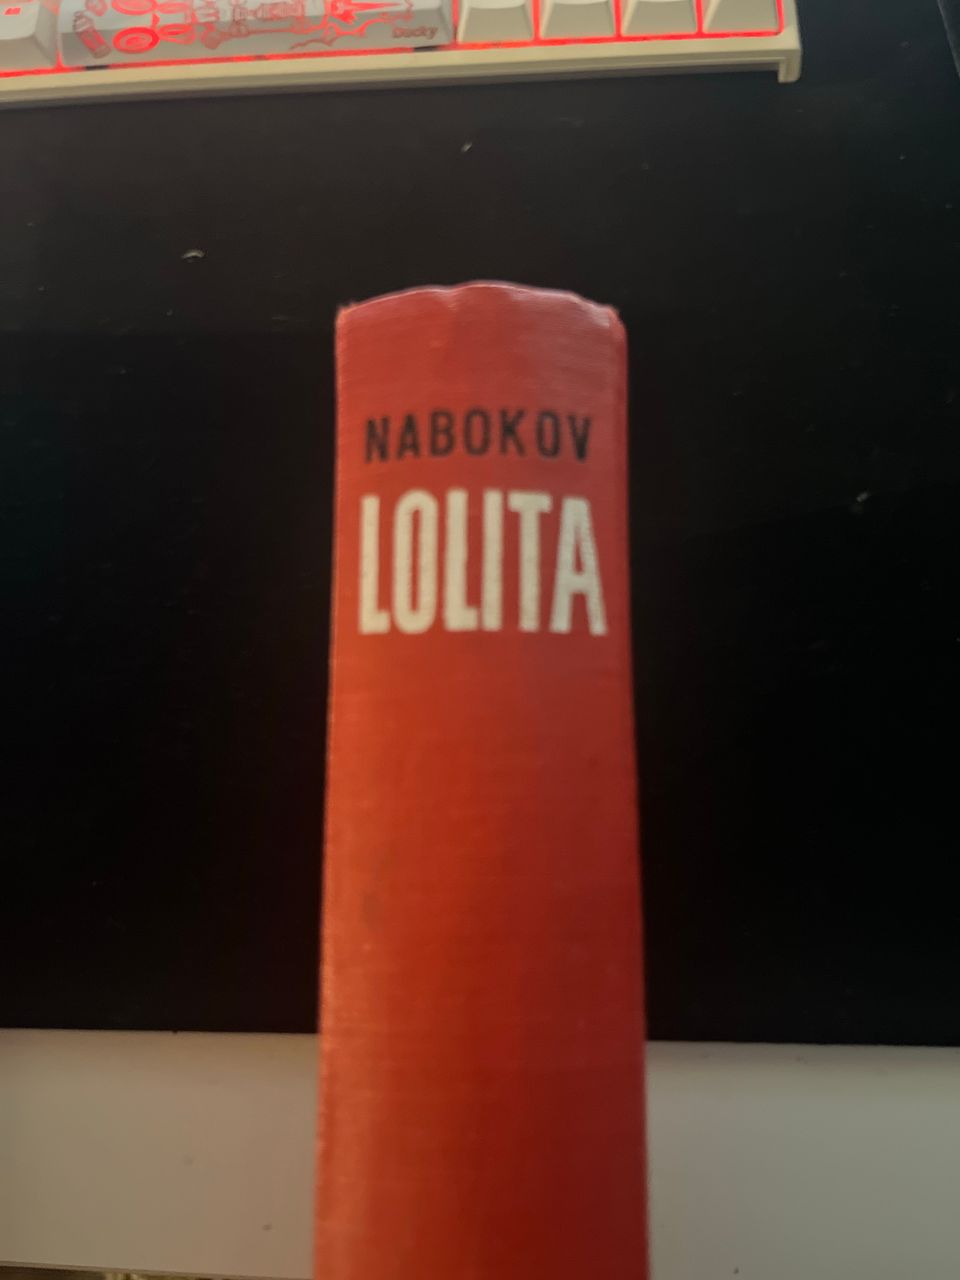 Nabokov - Lolita